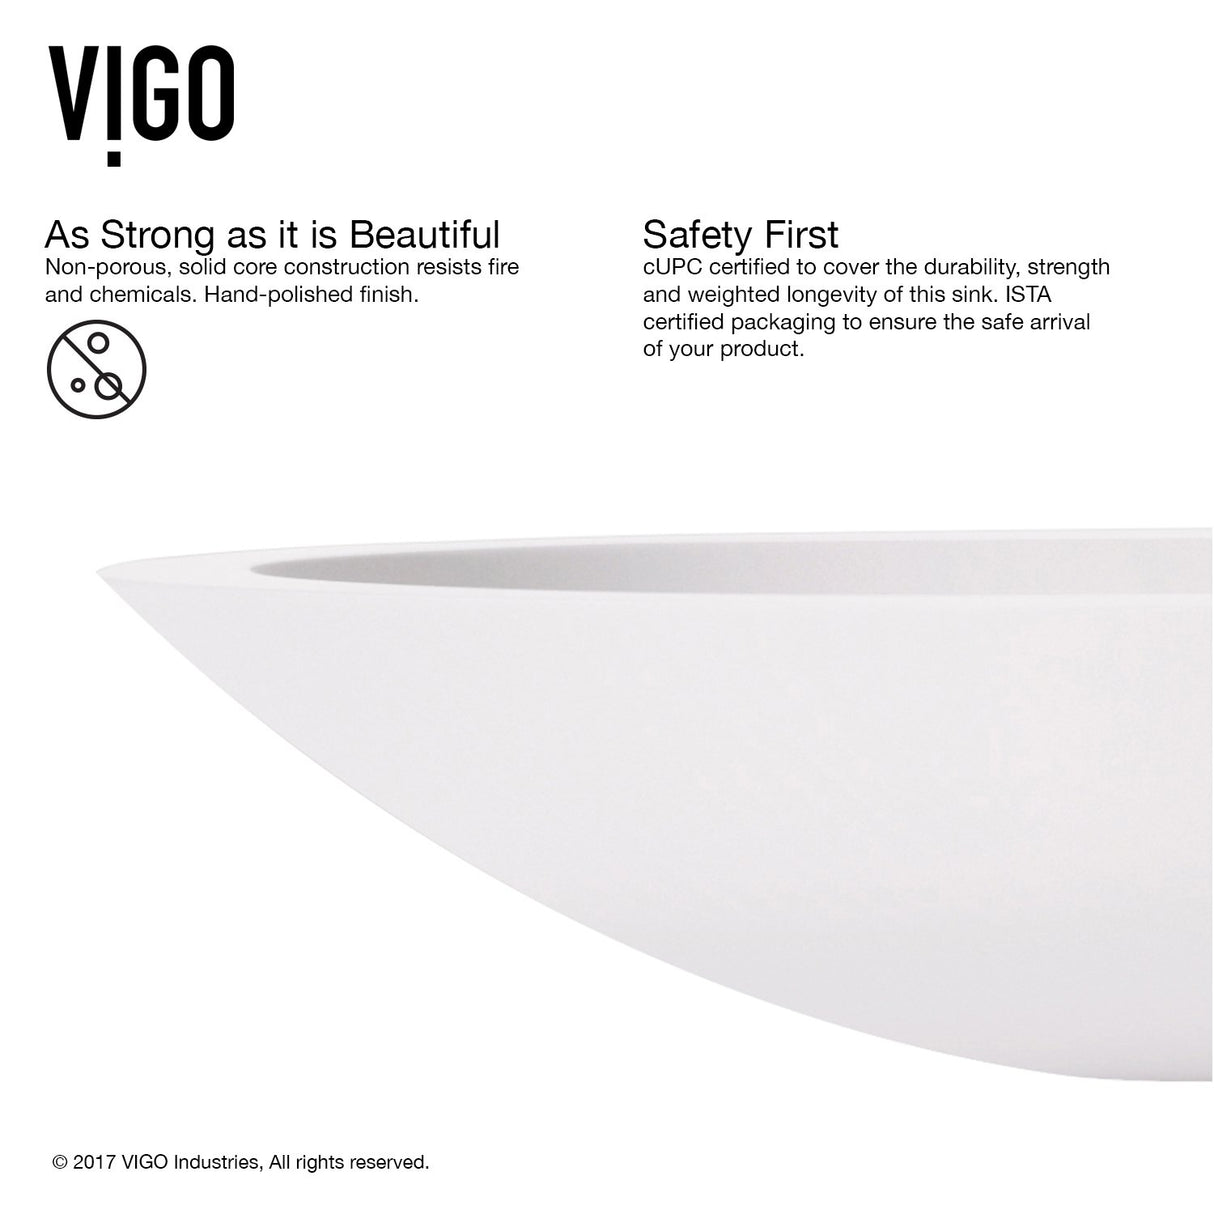 VIGO Wisteria 23.125 inch L x 13.5 inch W Over the Counter Freestanding Matte Stone Rectangular Vessel Bathroom Sink in Matte White - Sink for Bathroom VG04011